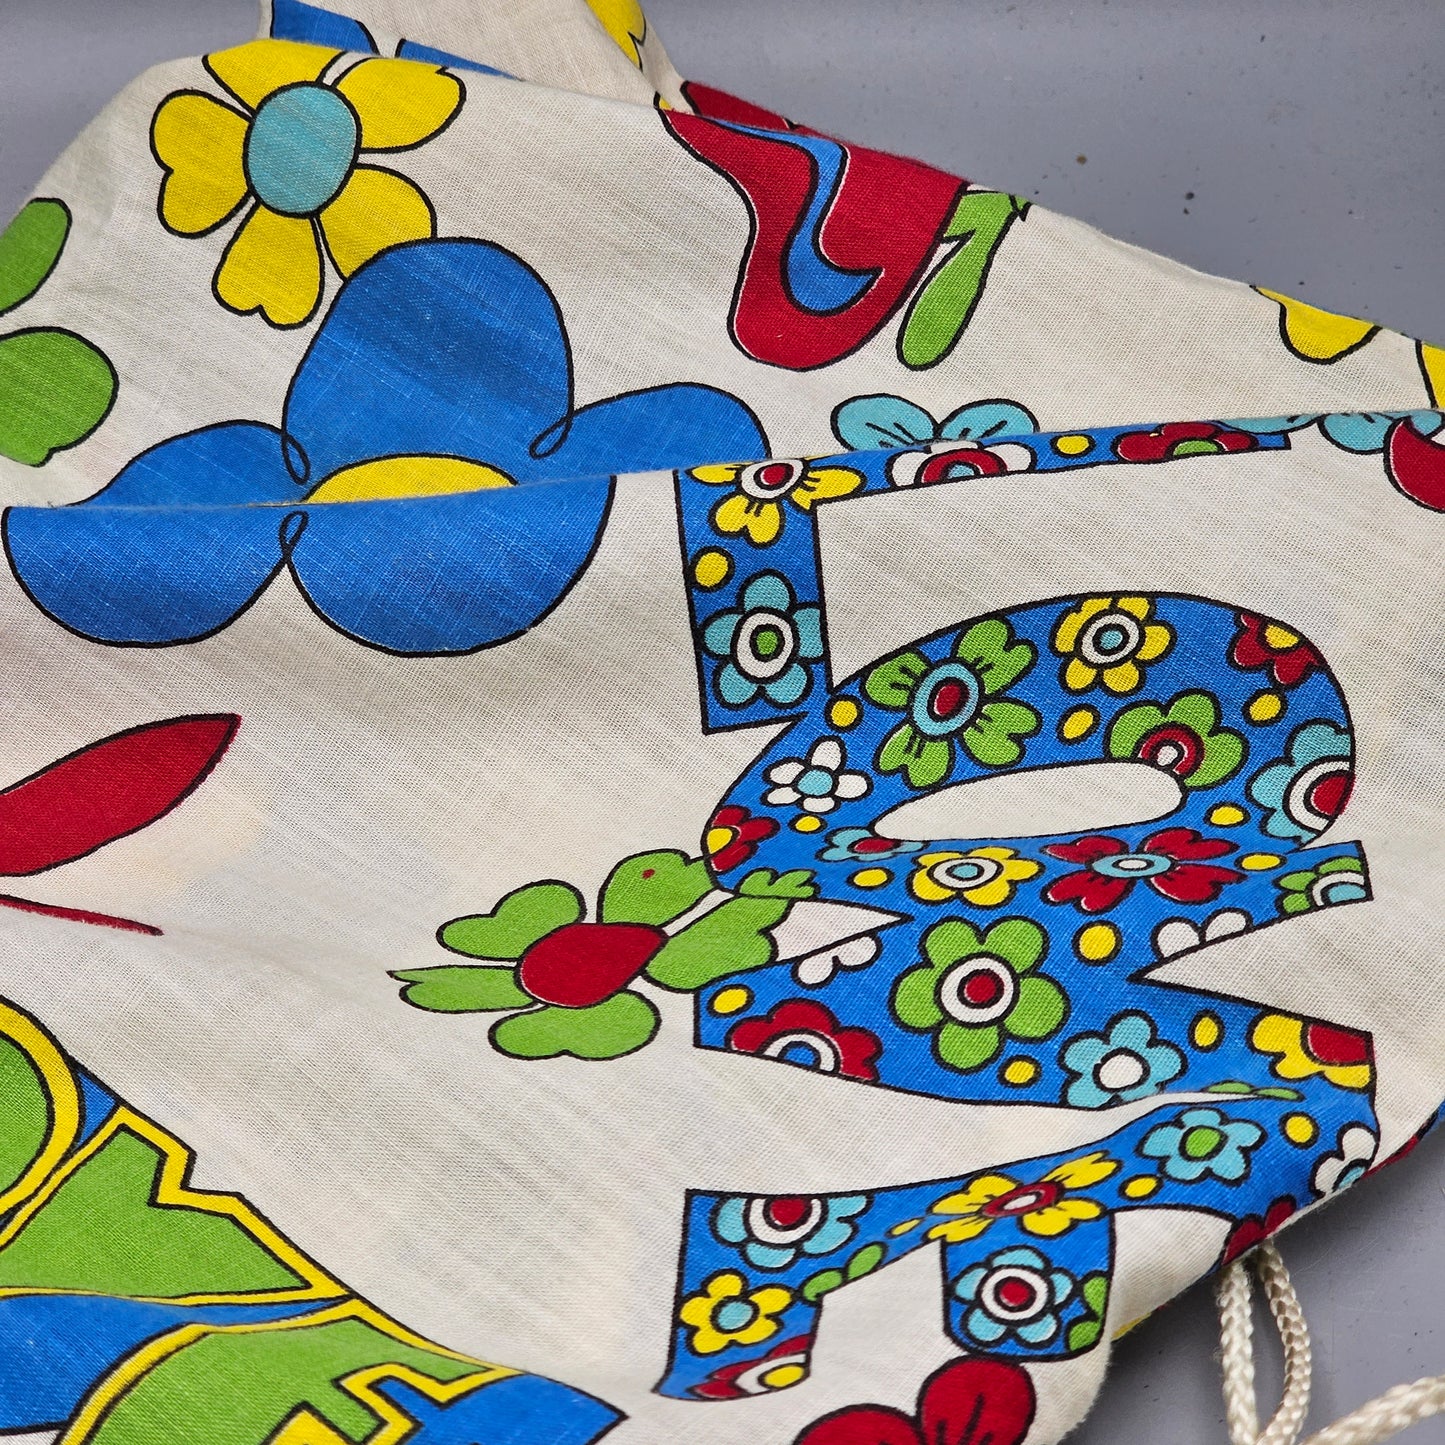 1960's Mod Cotton Blend Fabric - Love & Flower Power Drawstring Bag